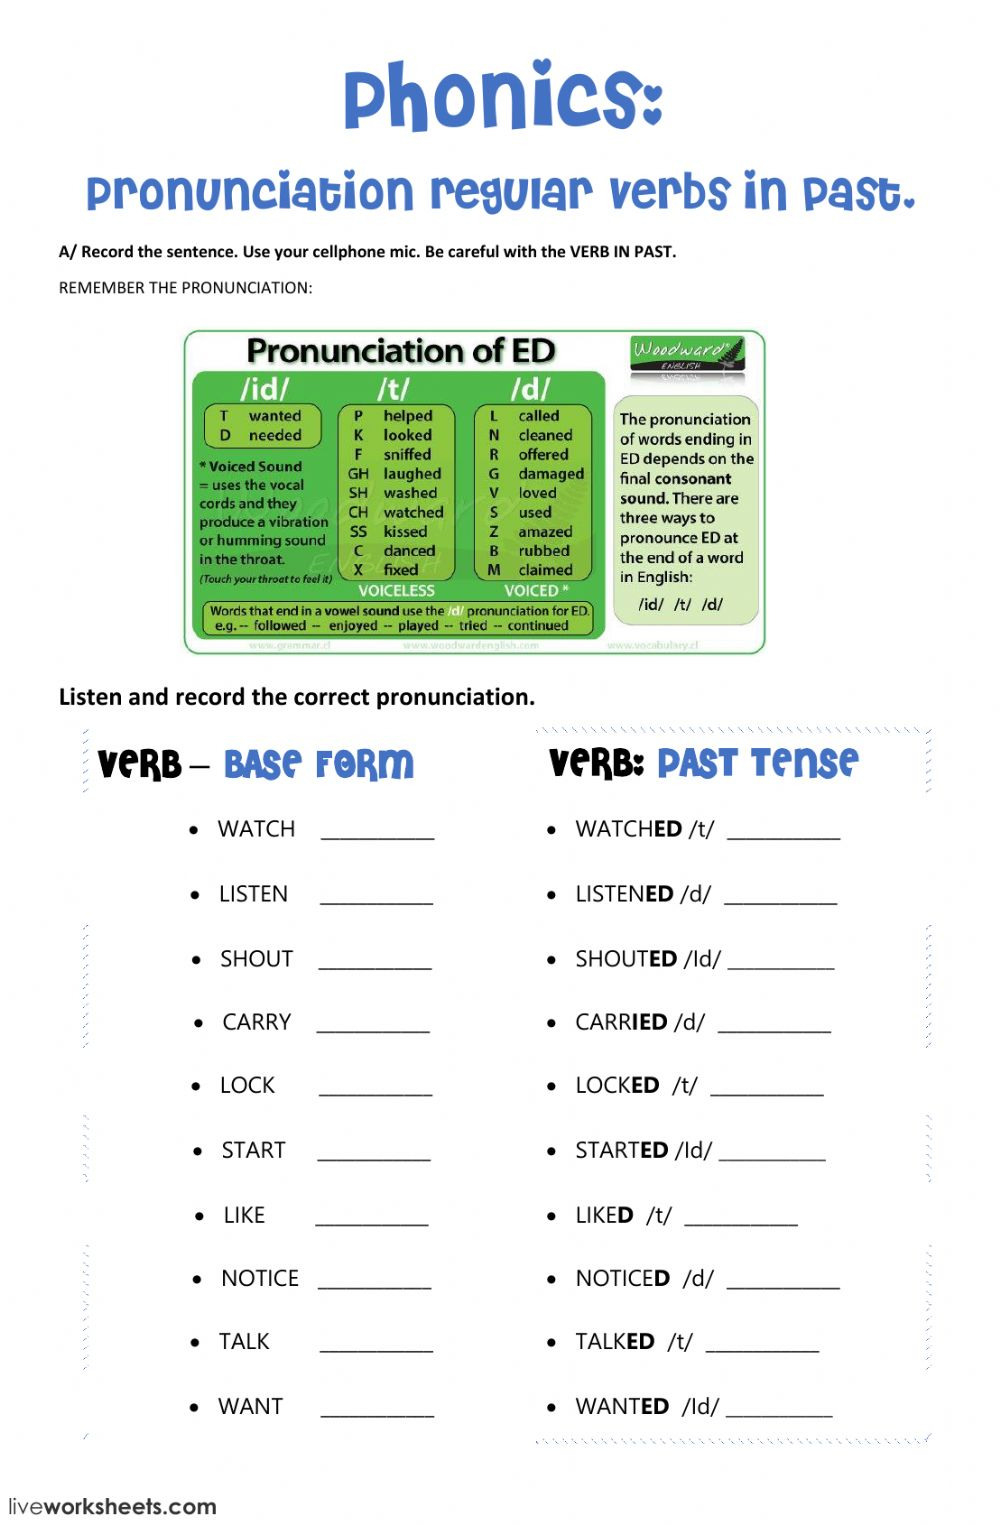 Pronunciation Regular Verbs In Past Ed Interactive Worksheet Db excel